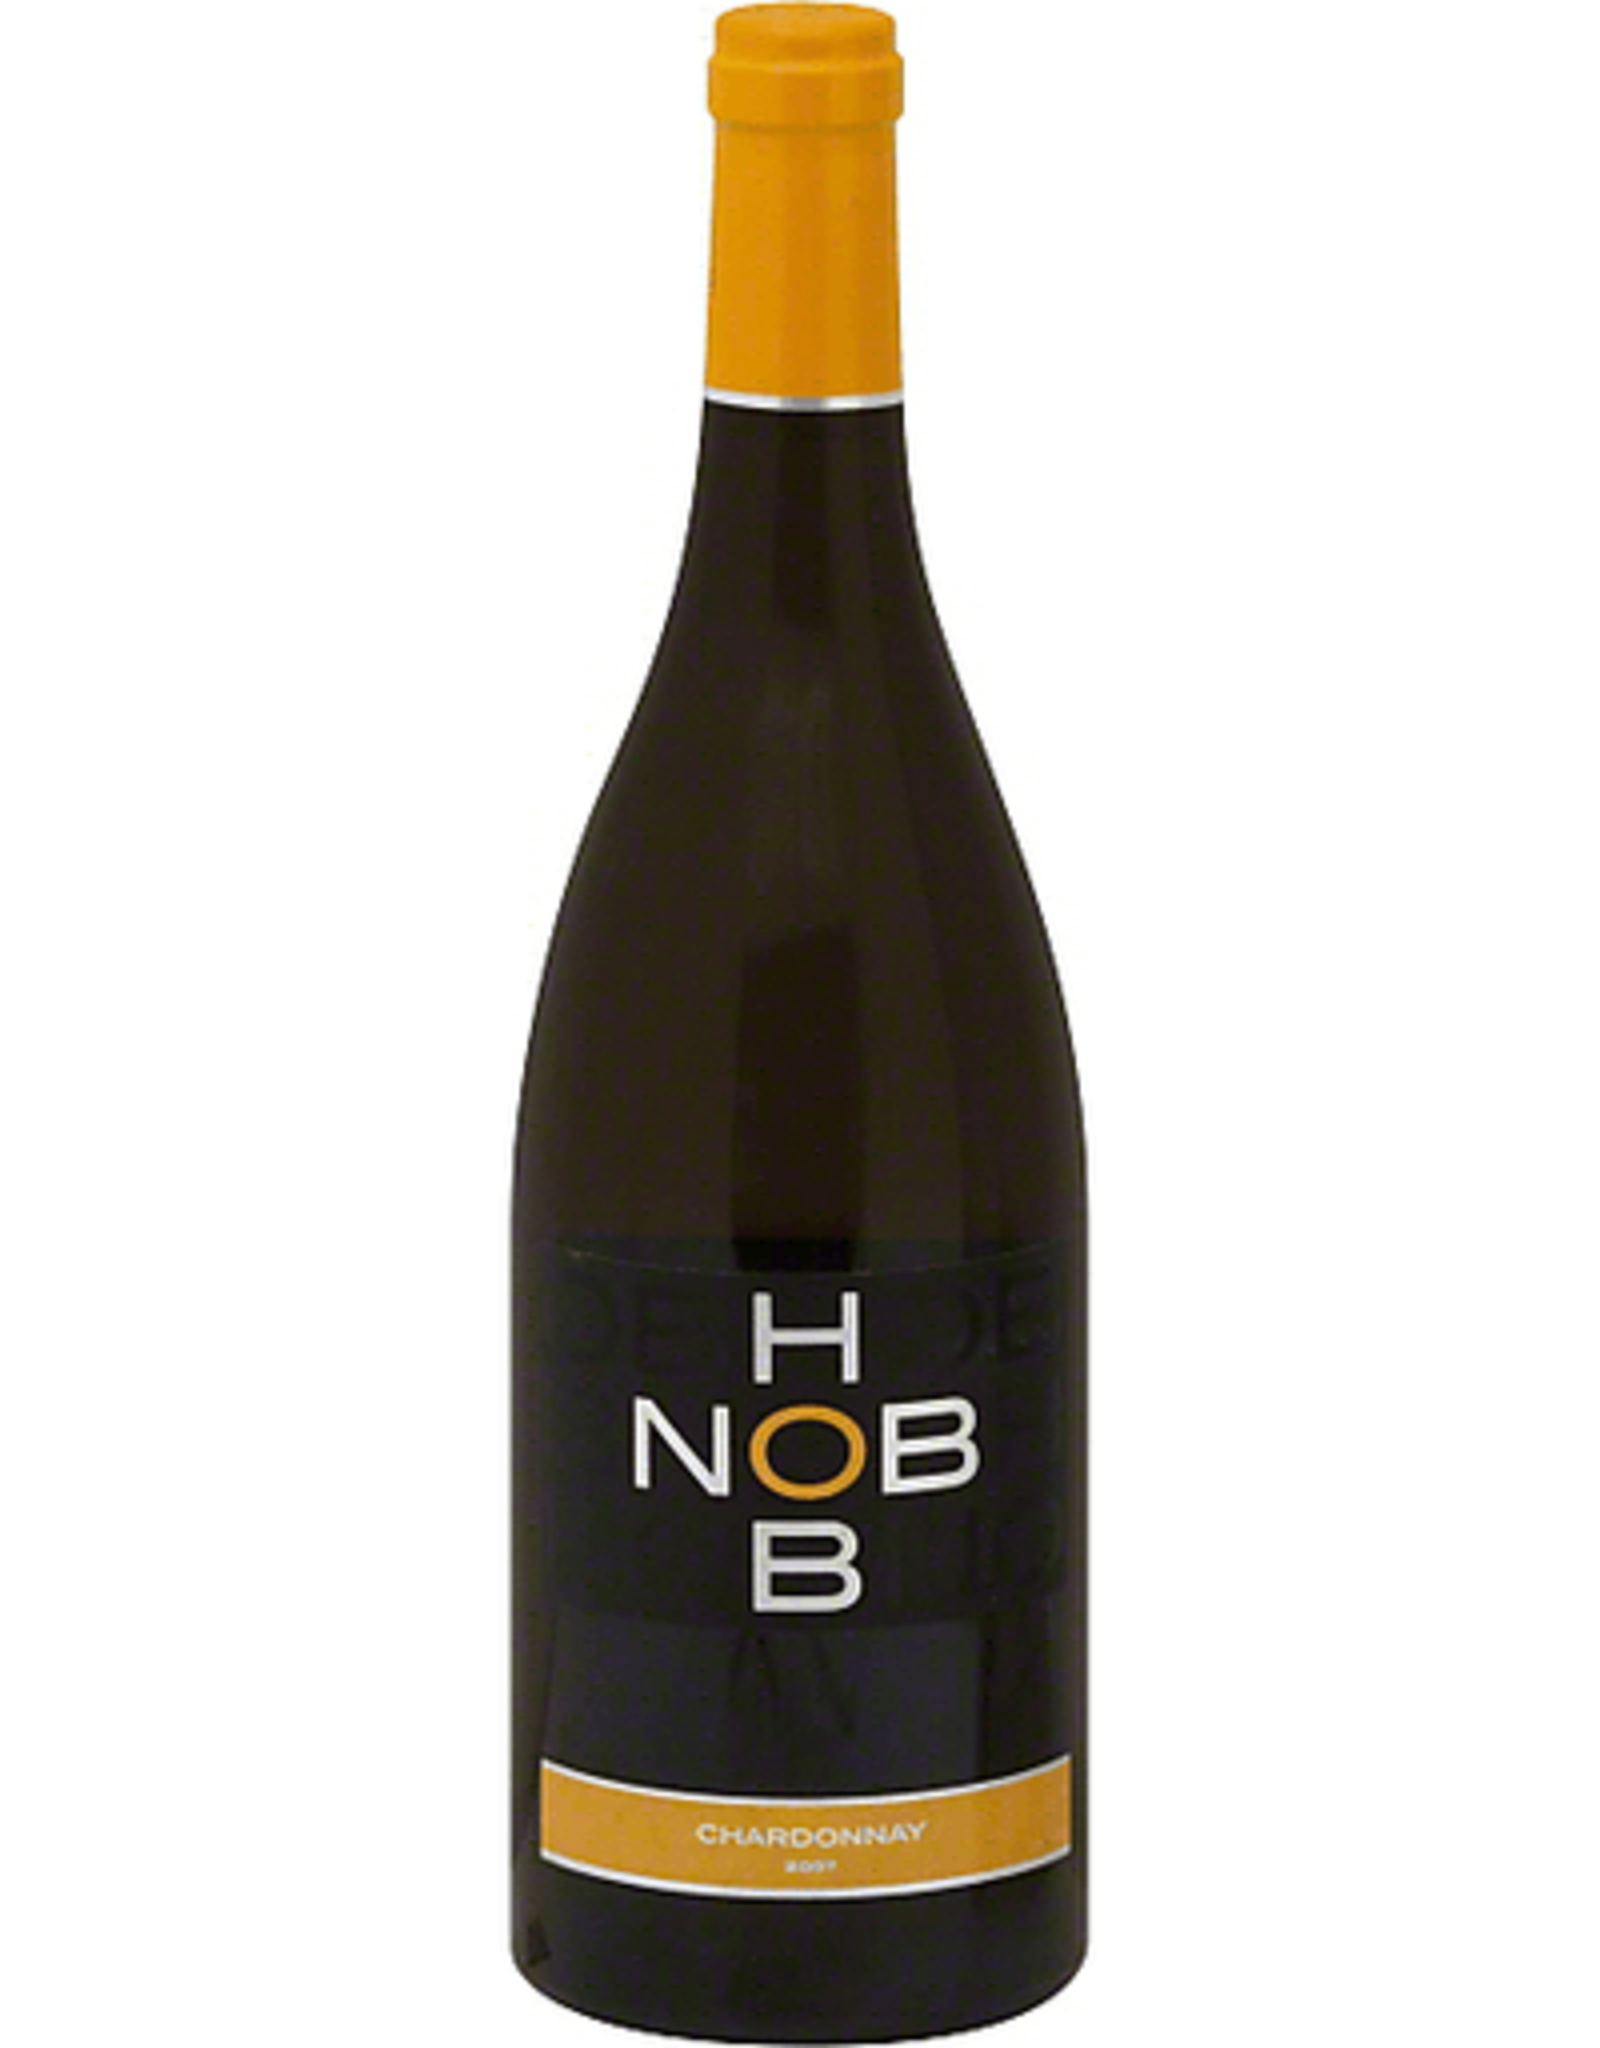 Hobnob Cellars Sauvignon Blanc 2021